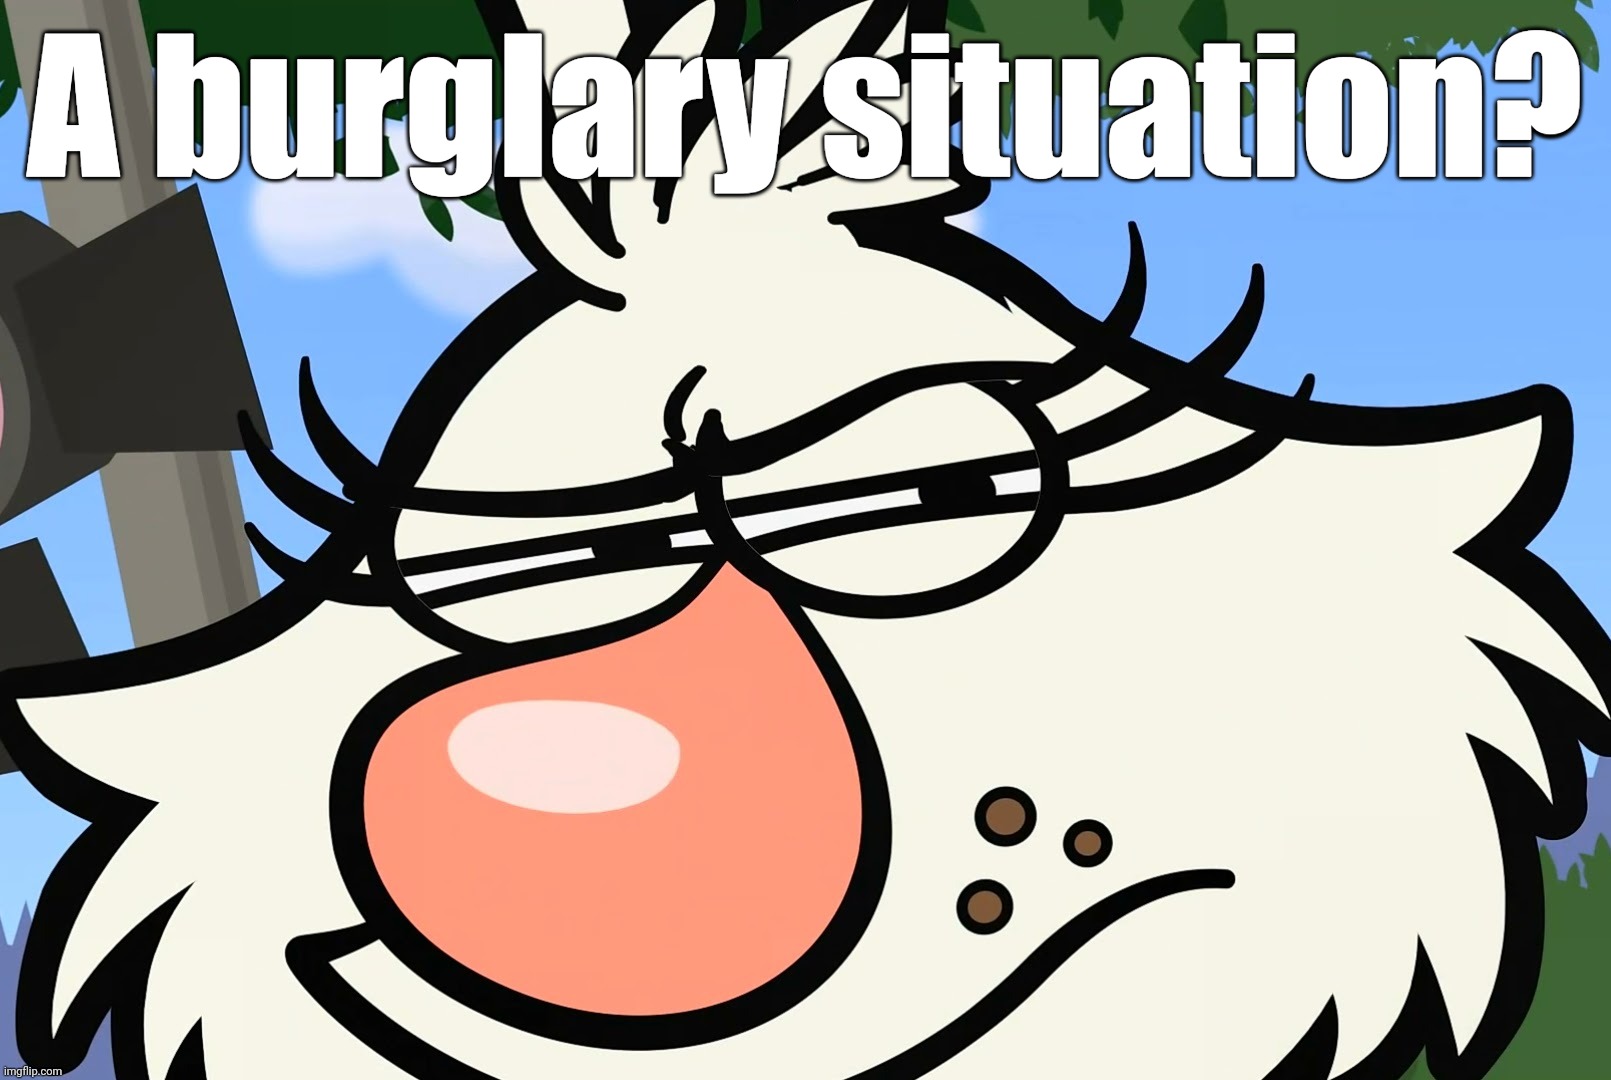 A burglary situation? | made w/ Imgflip meme maker